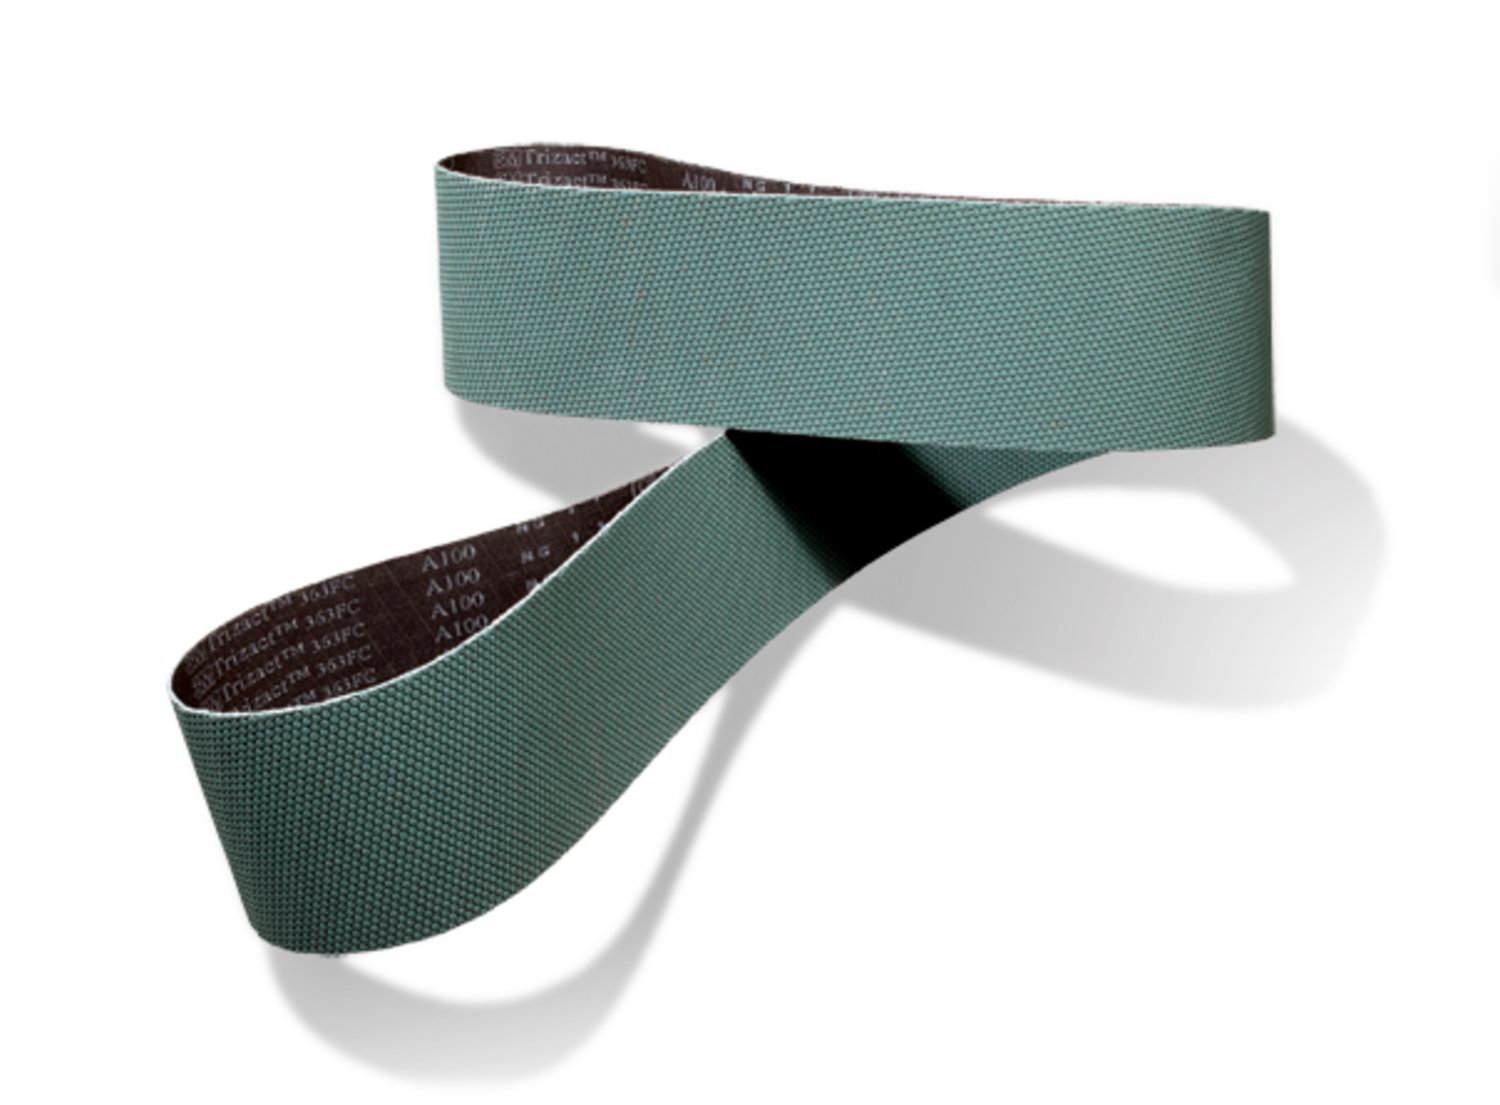 7010515019 - 3M Trizact Cloth Belt 363FC, A100 YF-weight, 8 in x 60 in, Film-lok,
Full-flex